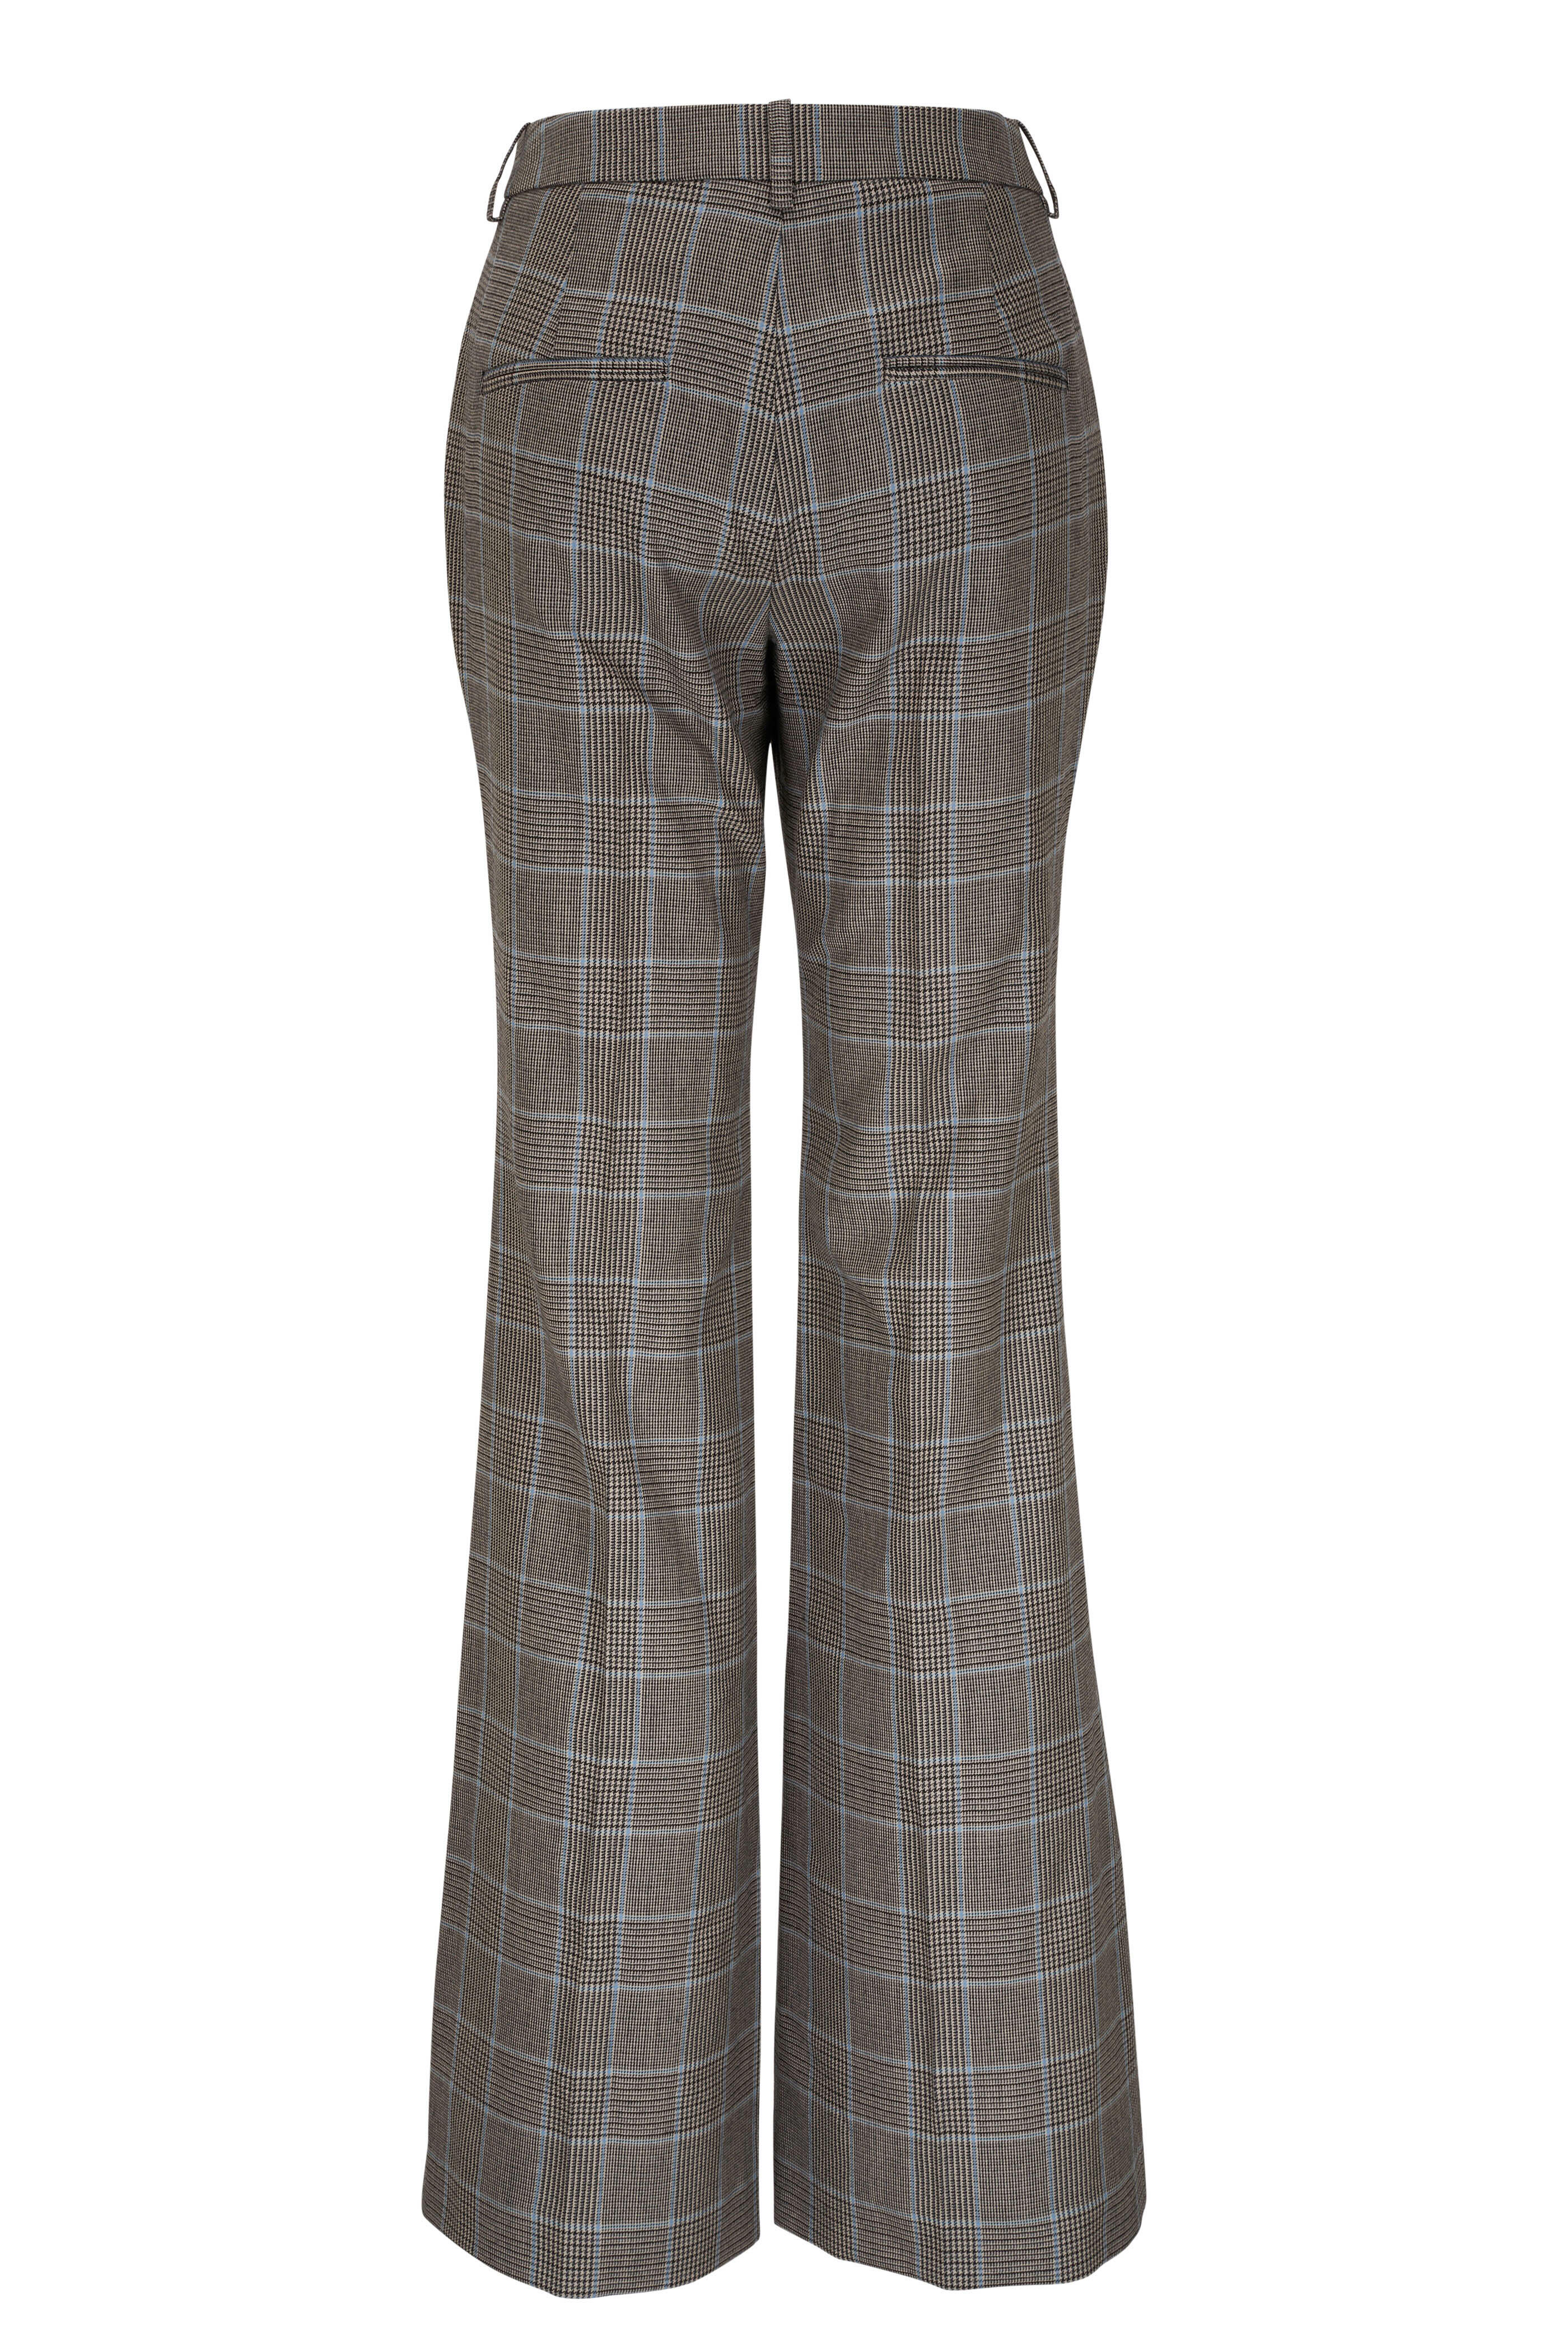 Derek Heart Trendy Plus Size High-Rise Pull-On Flare Pants - Macy's